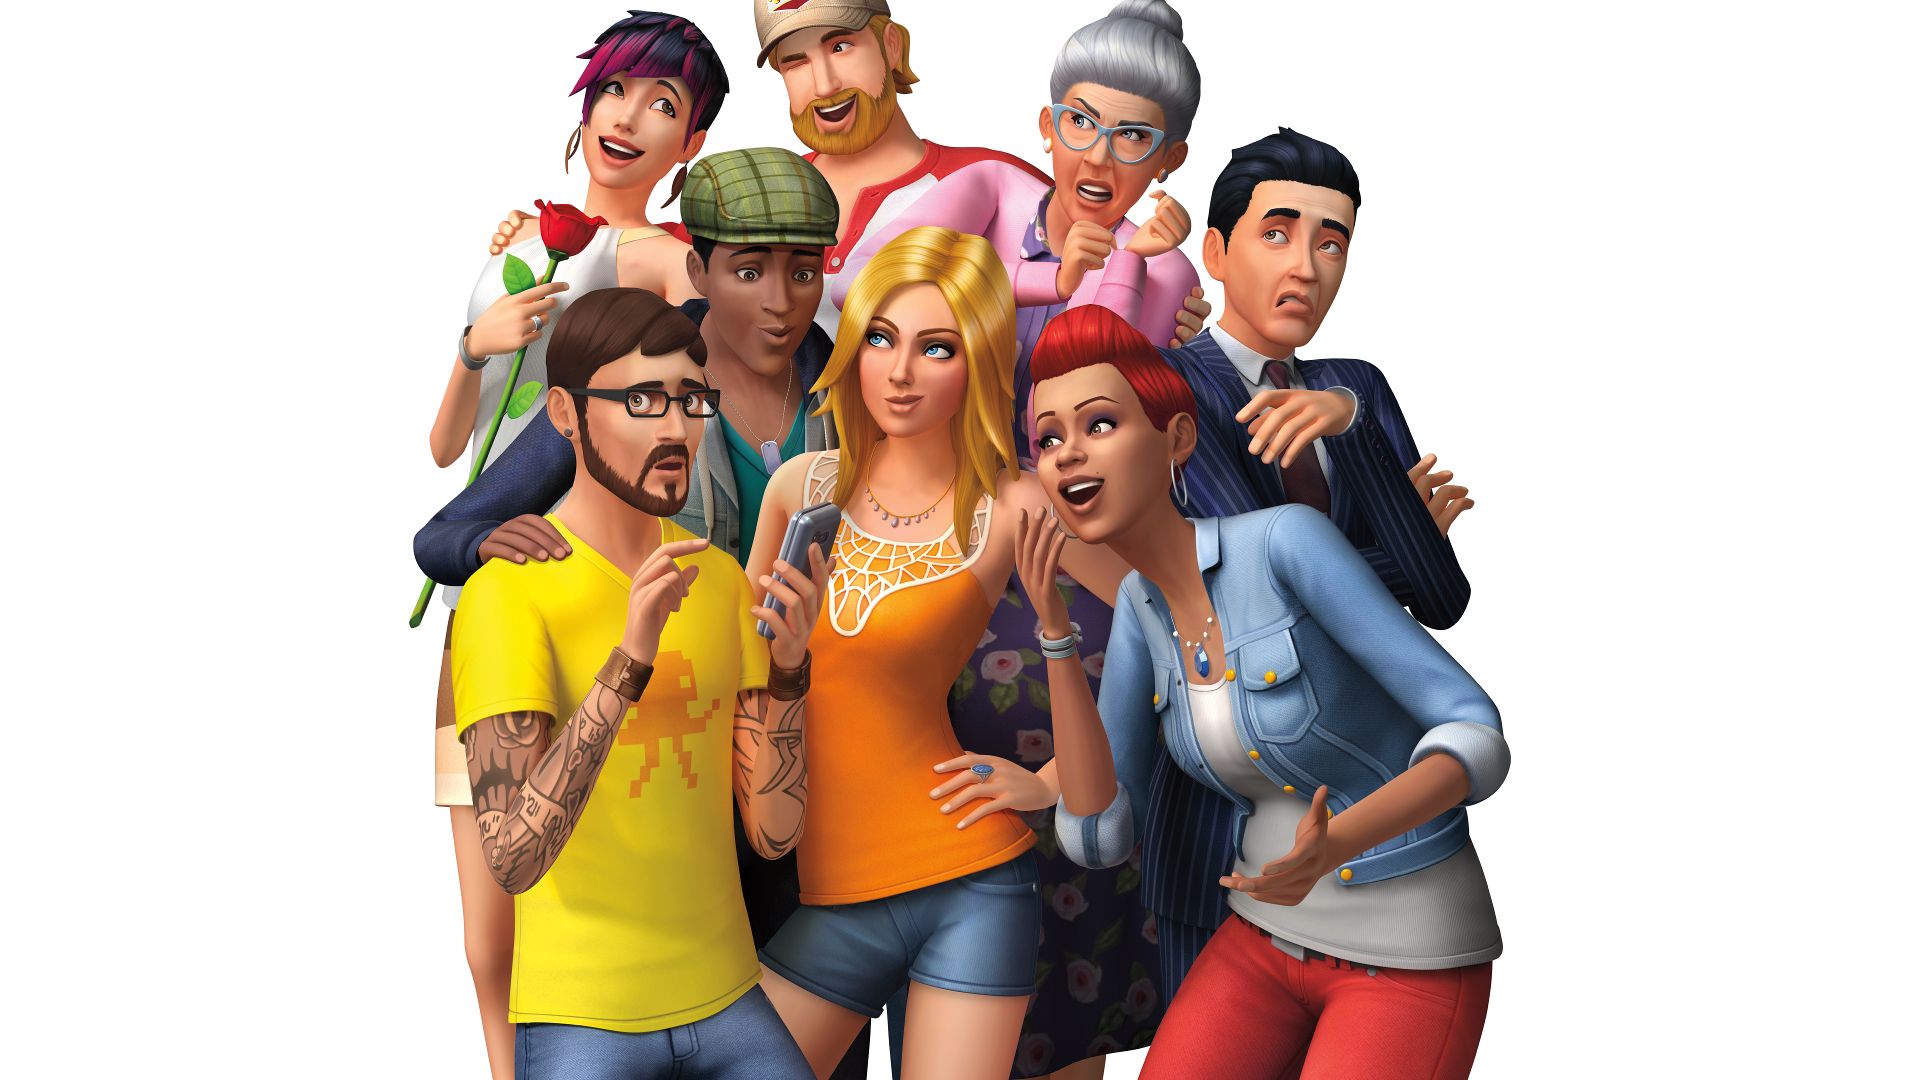 Electronics Art lancia sul mercato The Sims Mobile